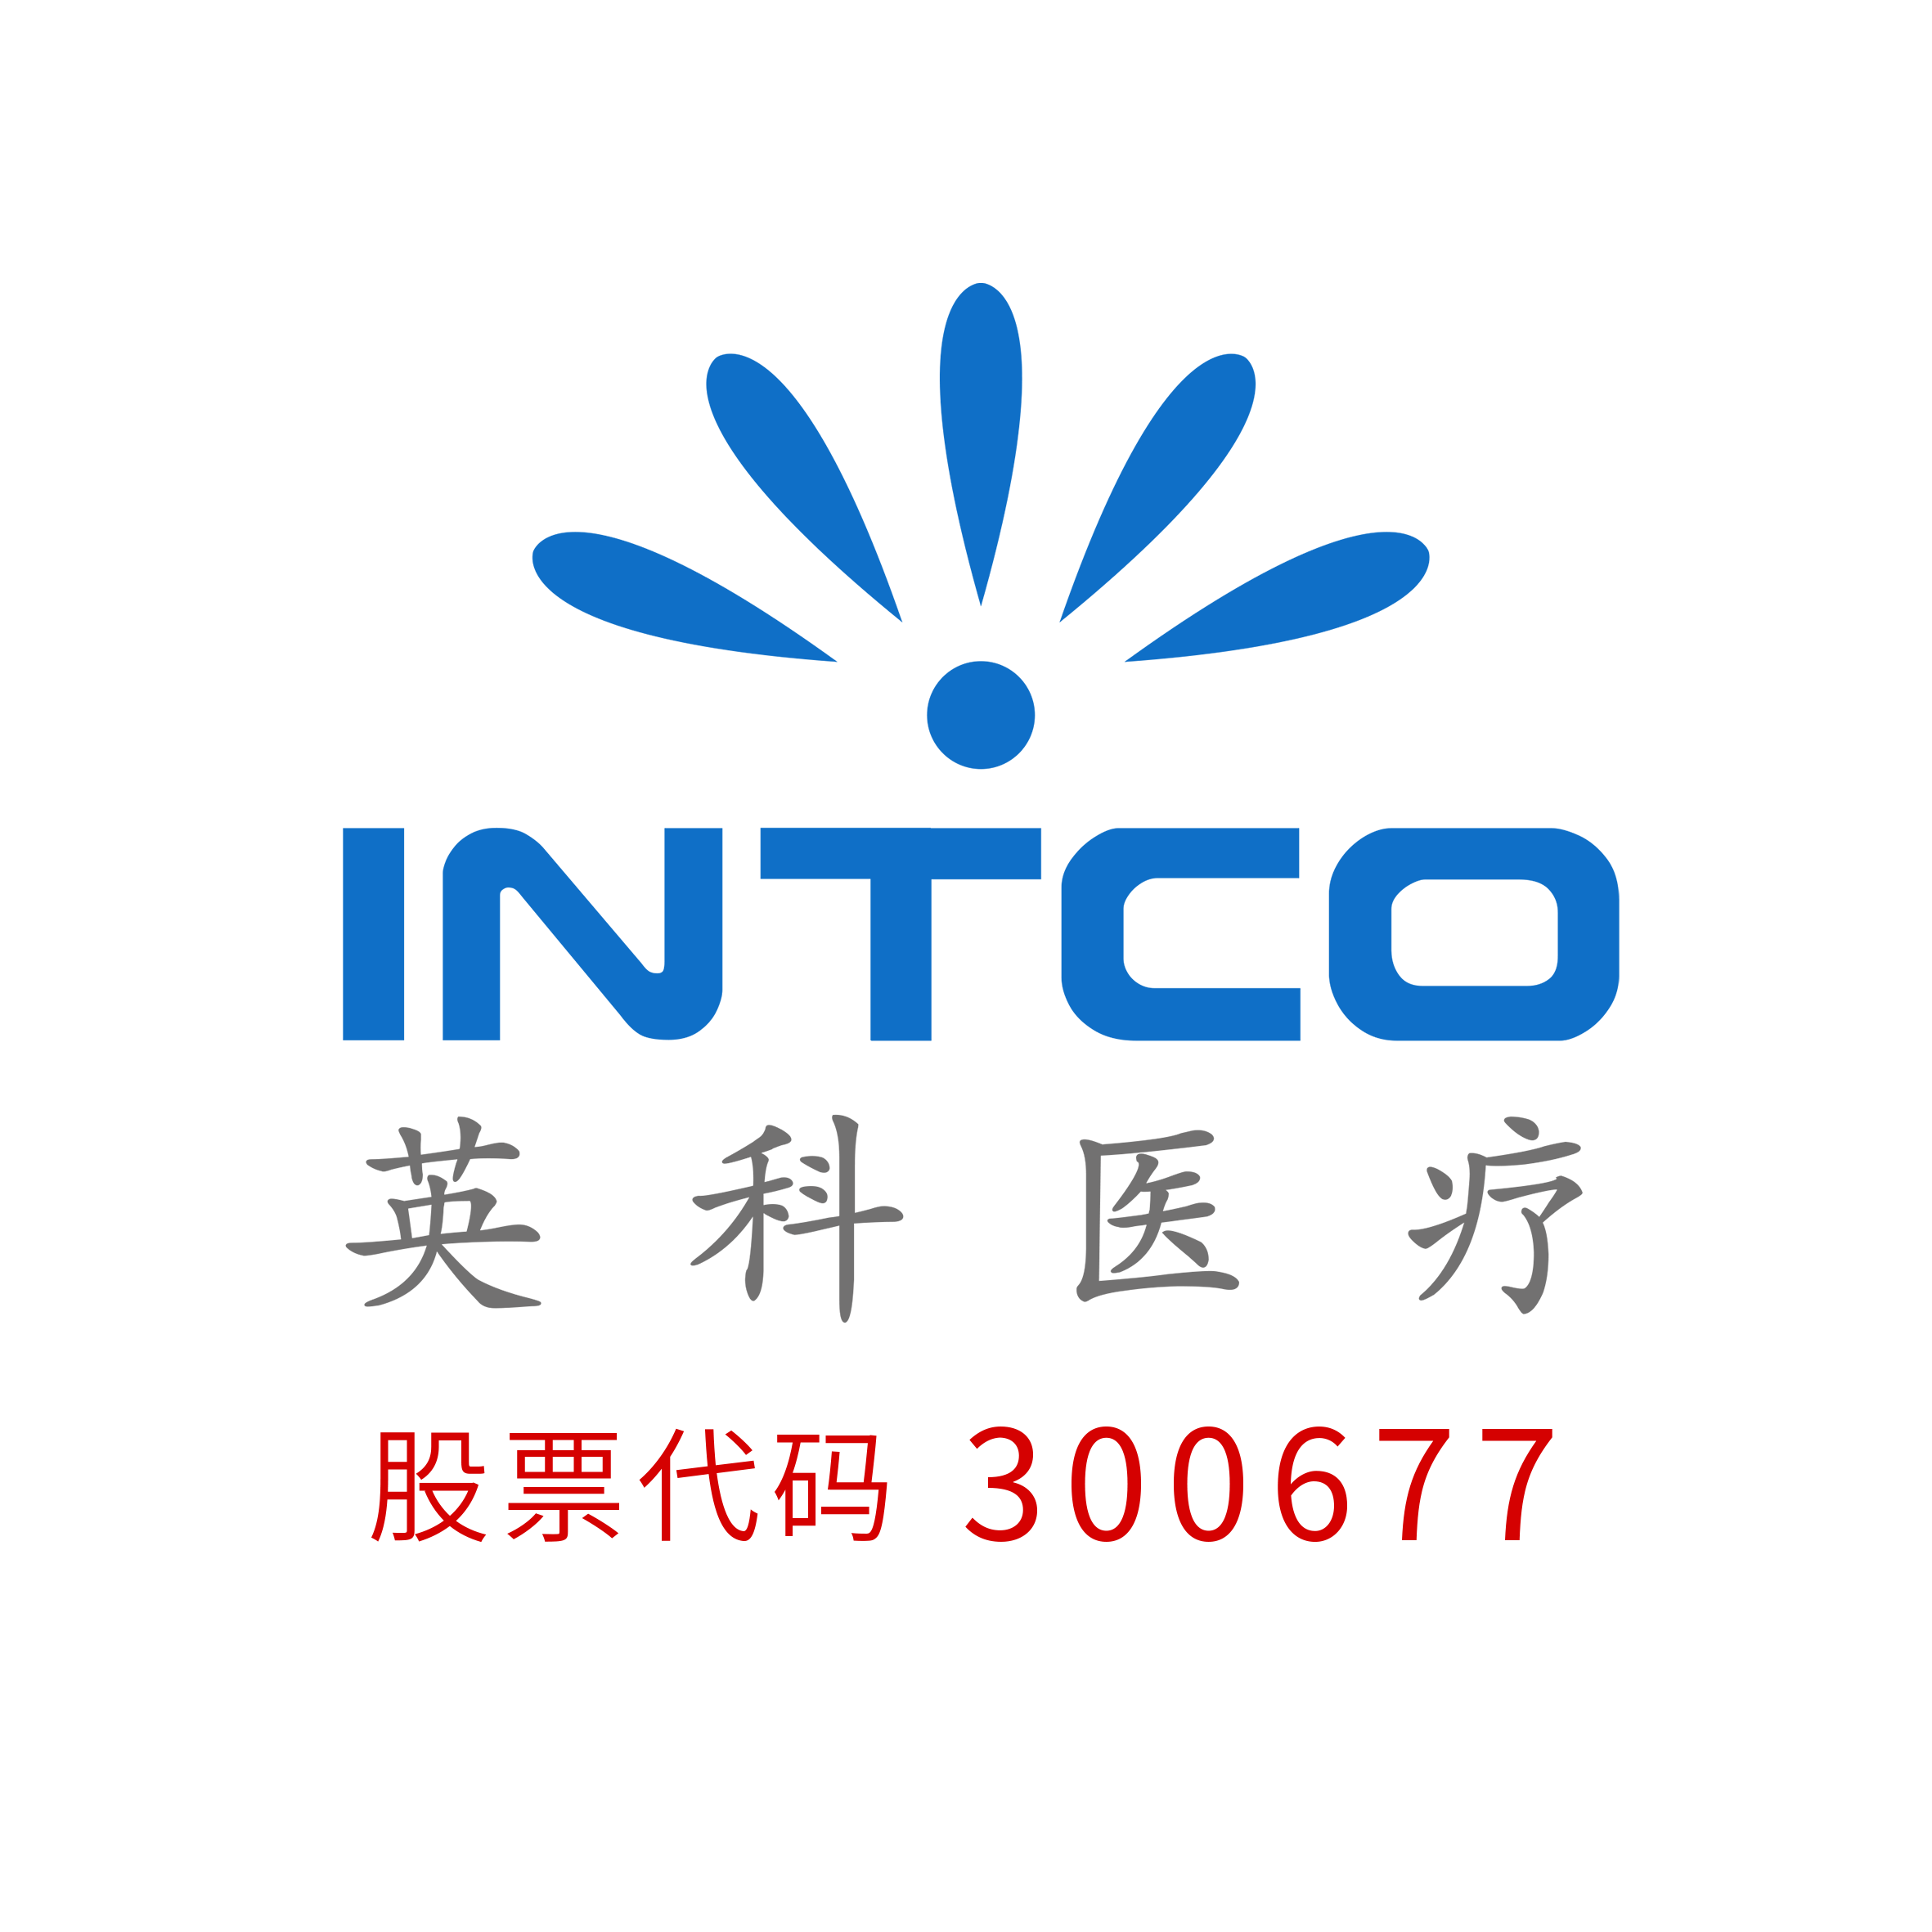 INTCO MEDICAL TECHNOLOGY CO., LTD.